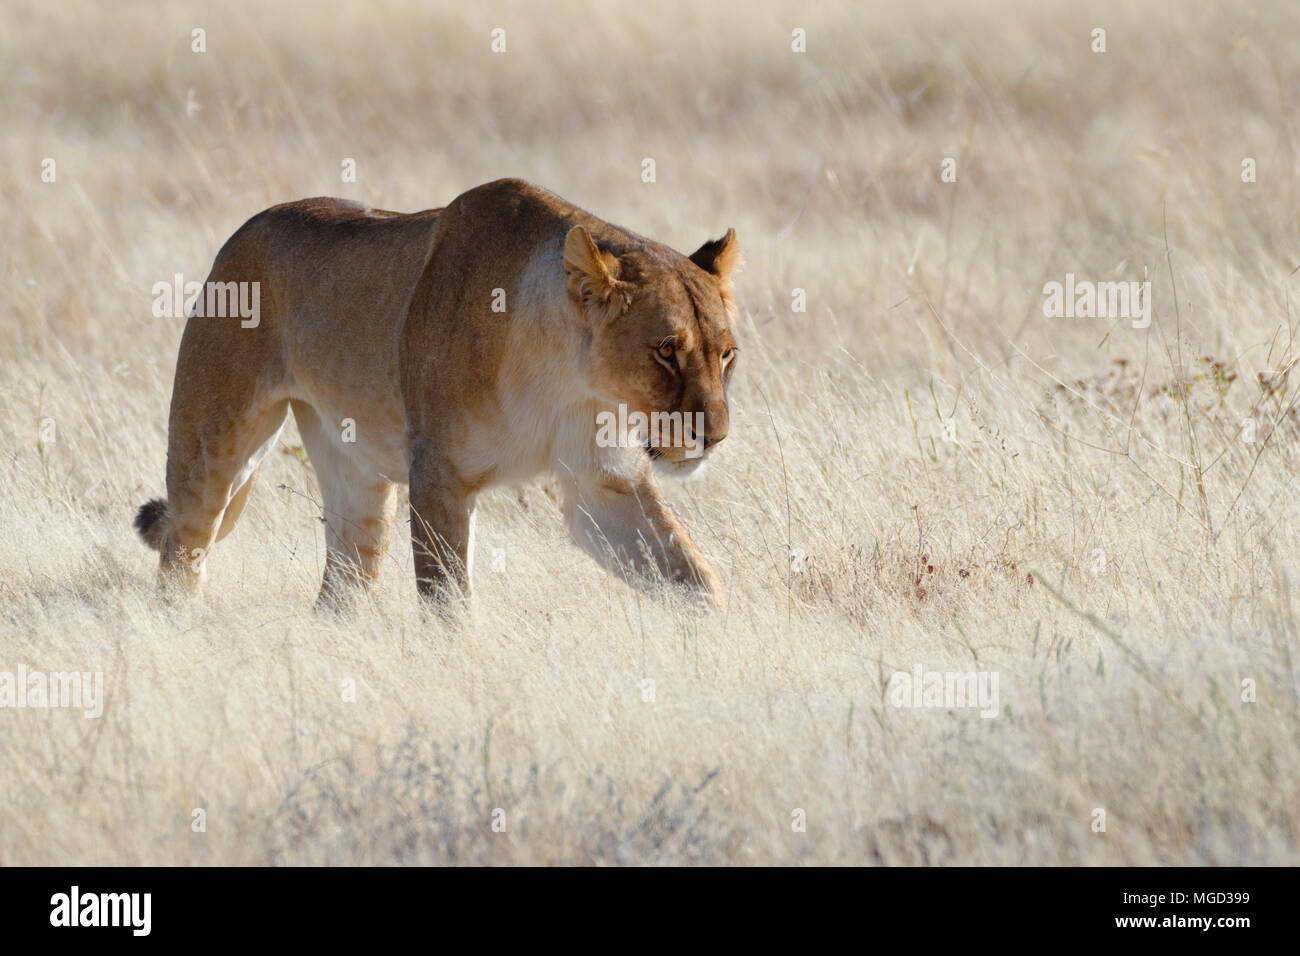 León (Panthera leo) caminar en pasto seco, el Parque Nacional de Etosha, Namibia, África Foto de stock